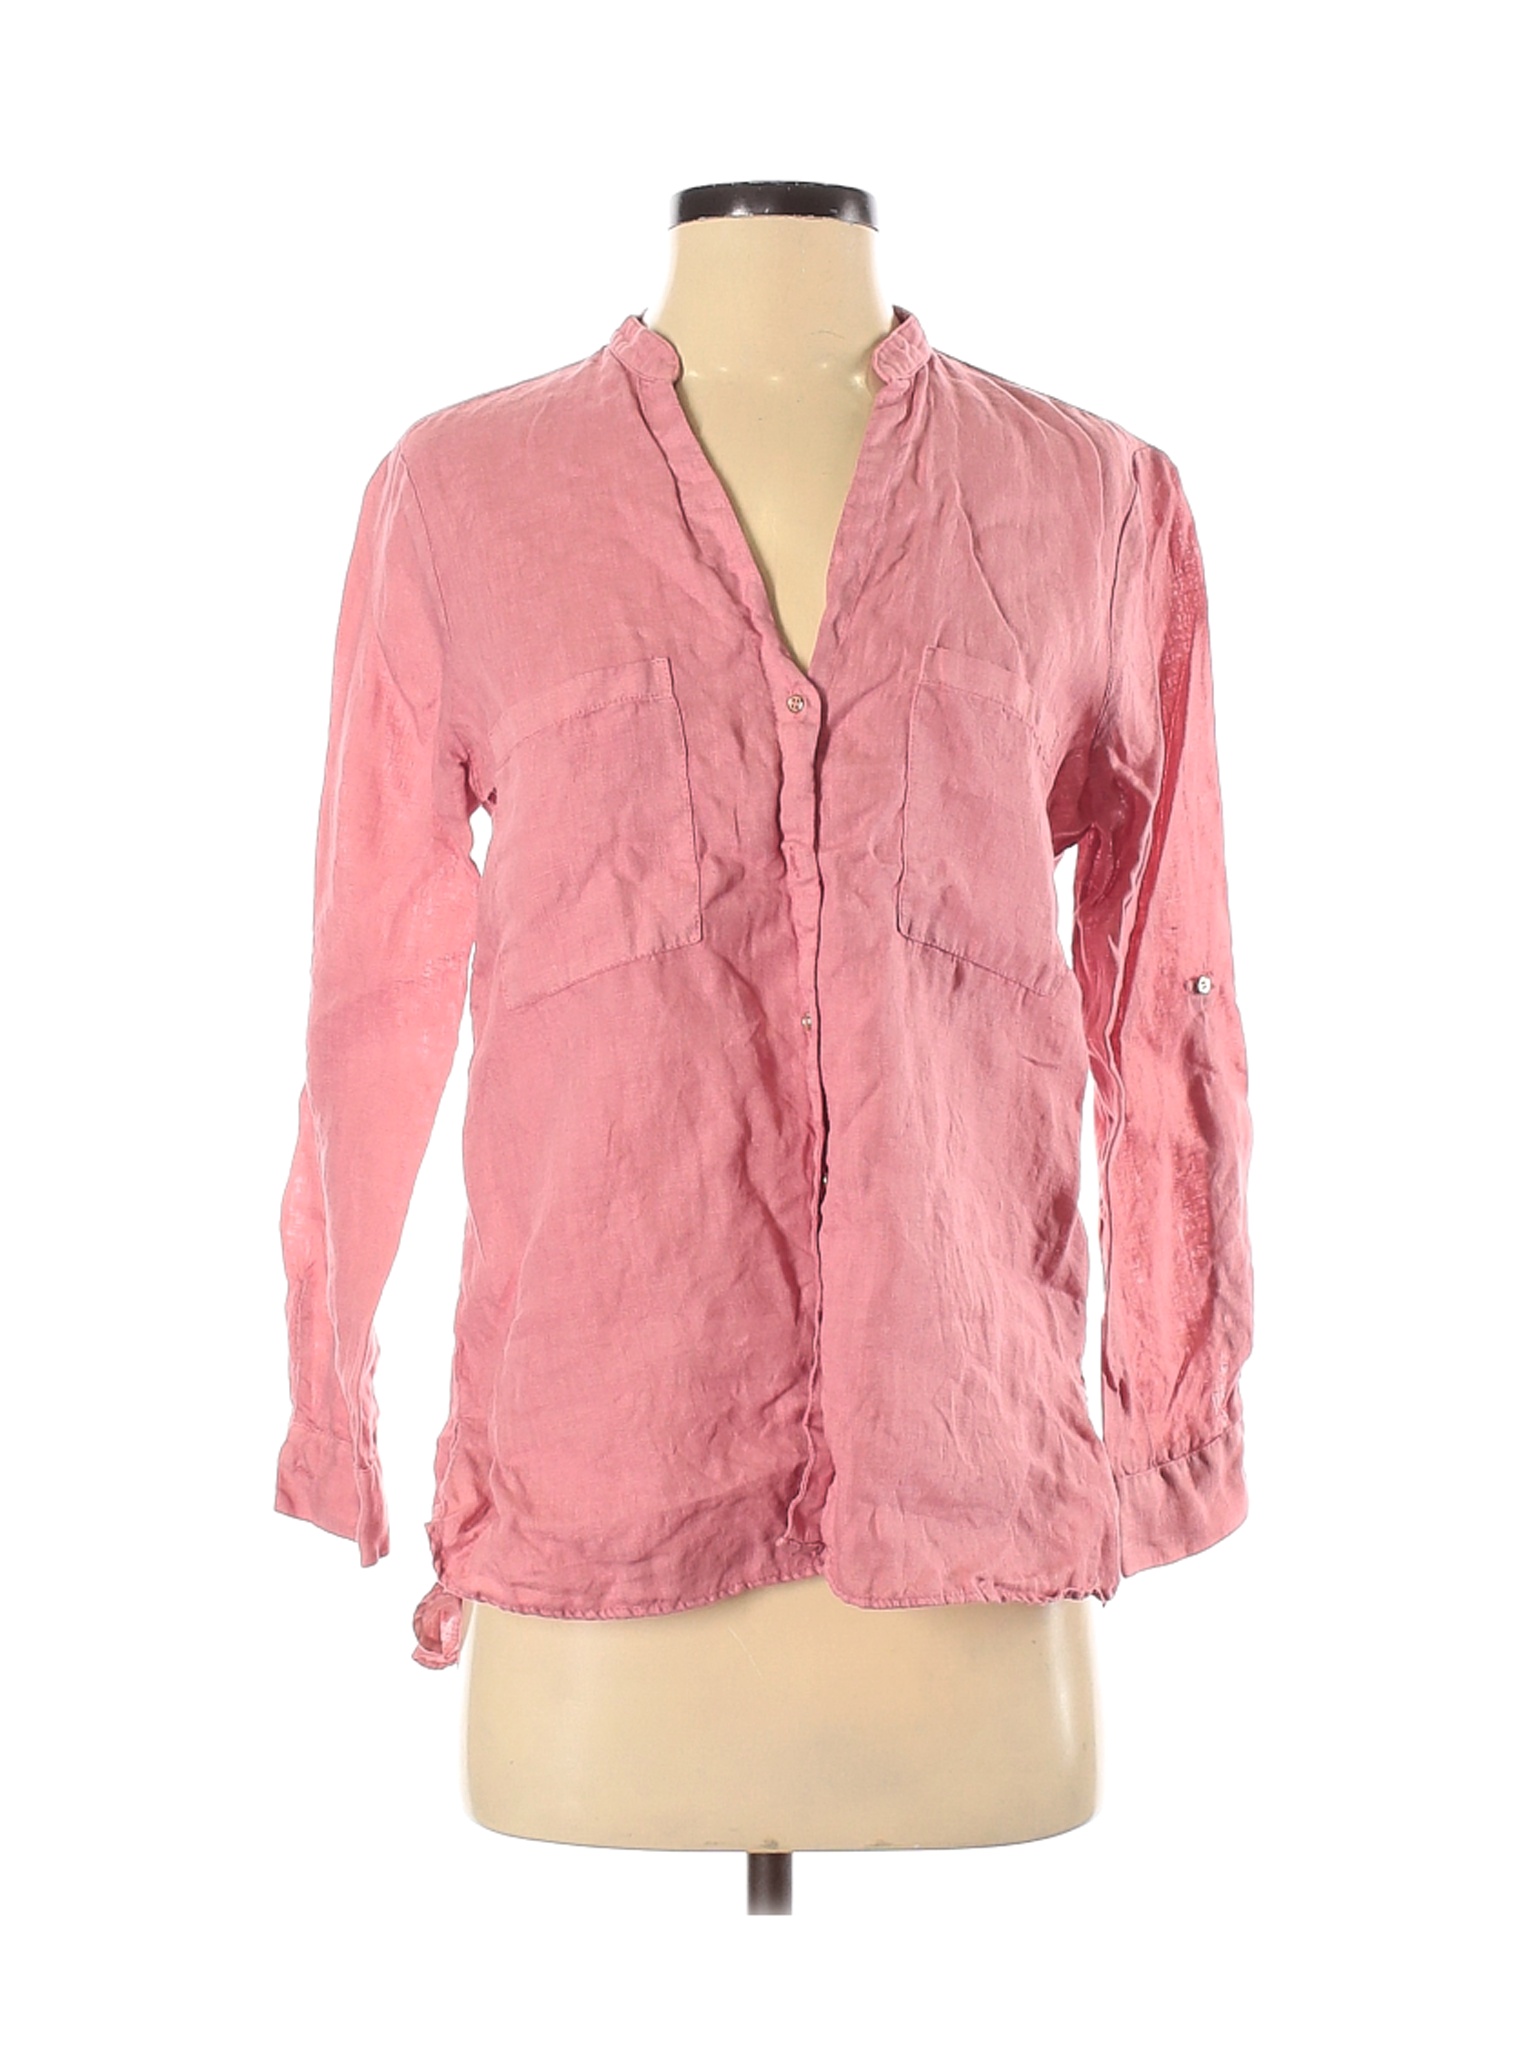 Zara TRF Women Pink Long Sleeve Button-Down Shirt S | eBay